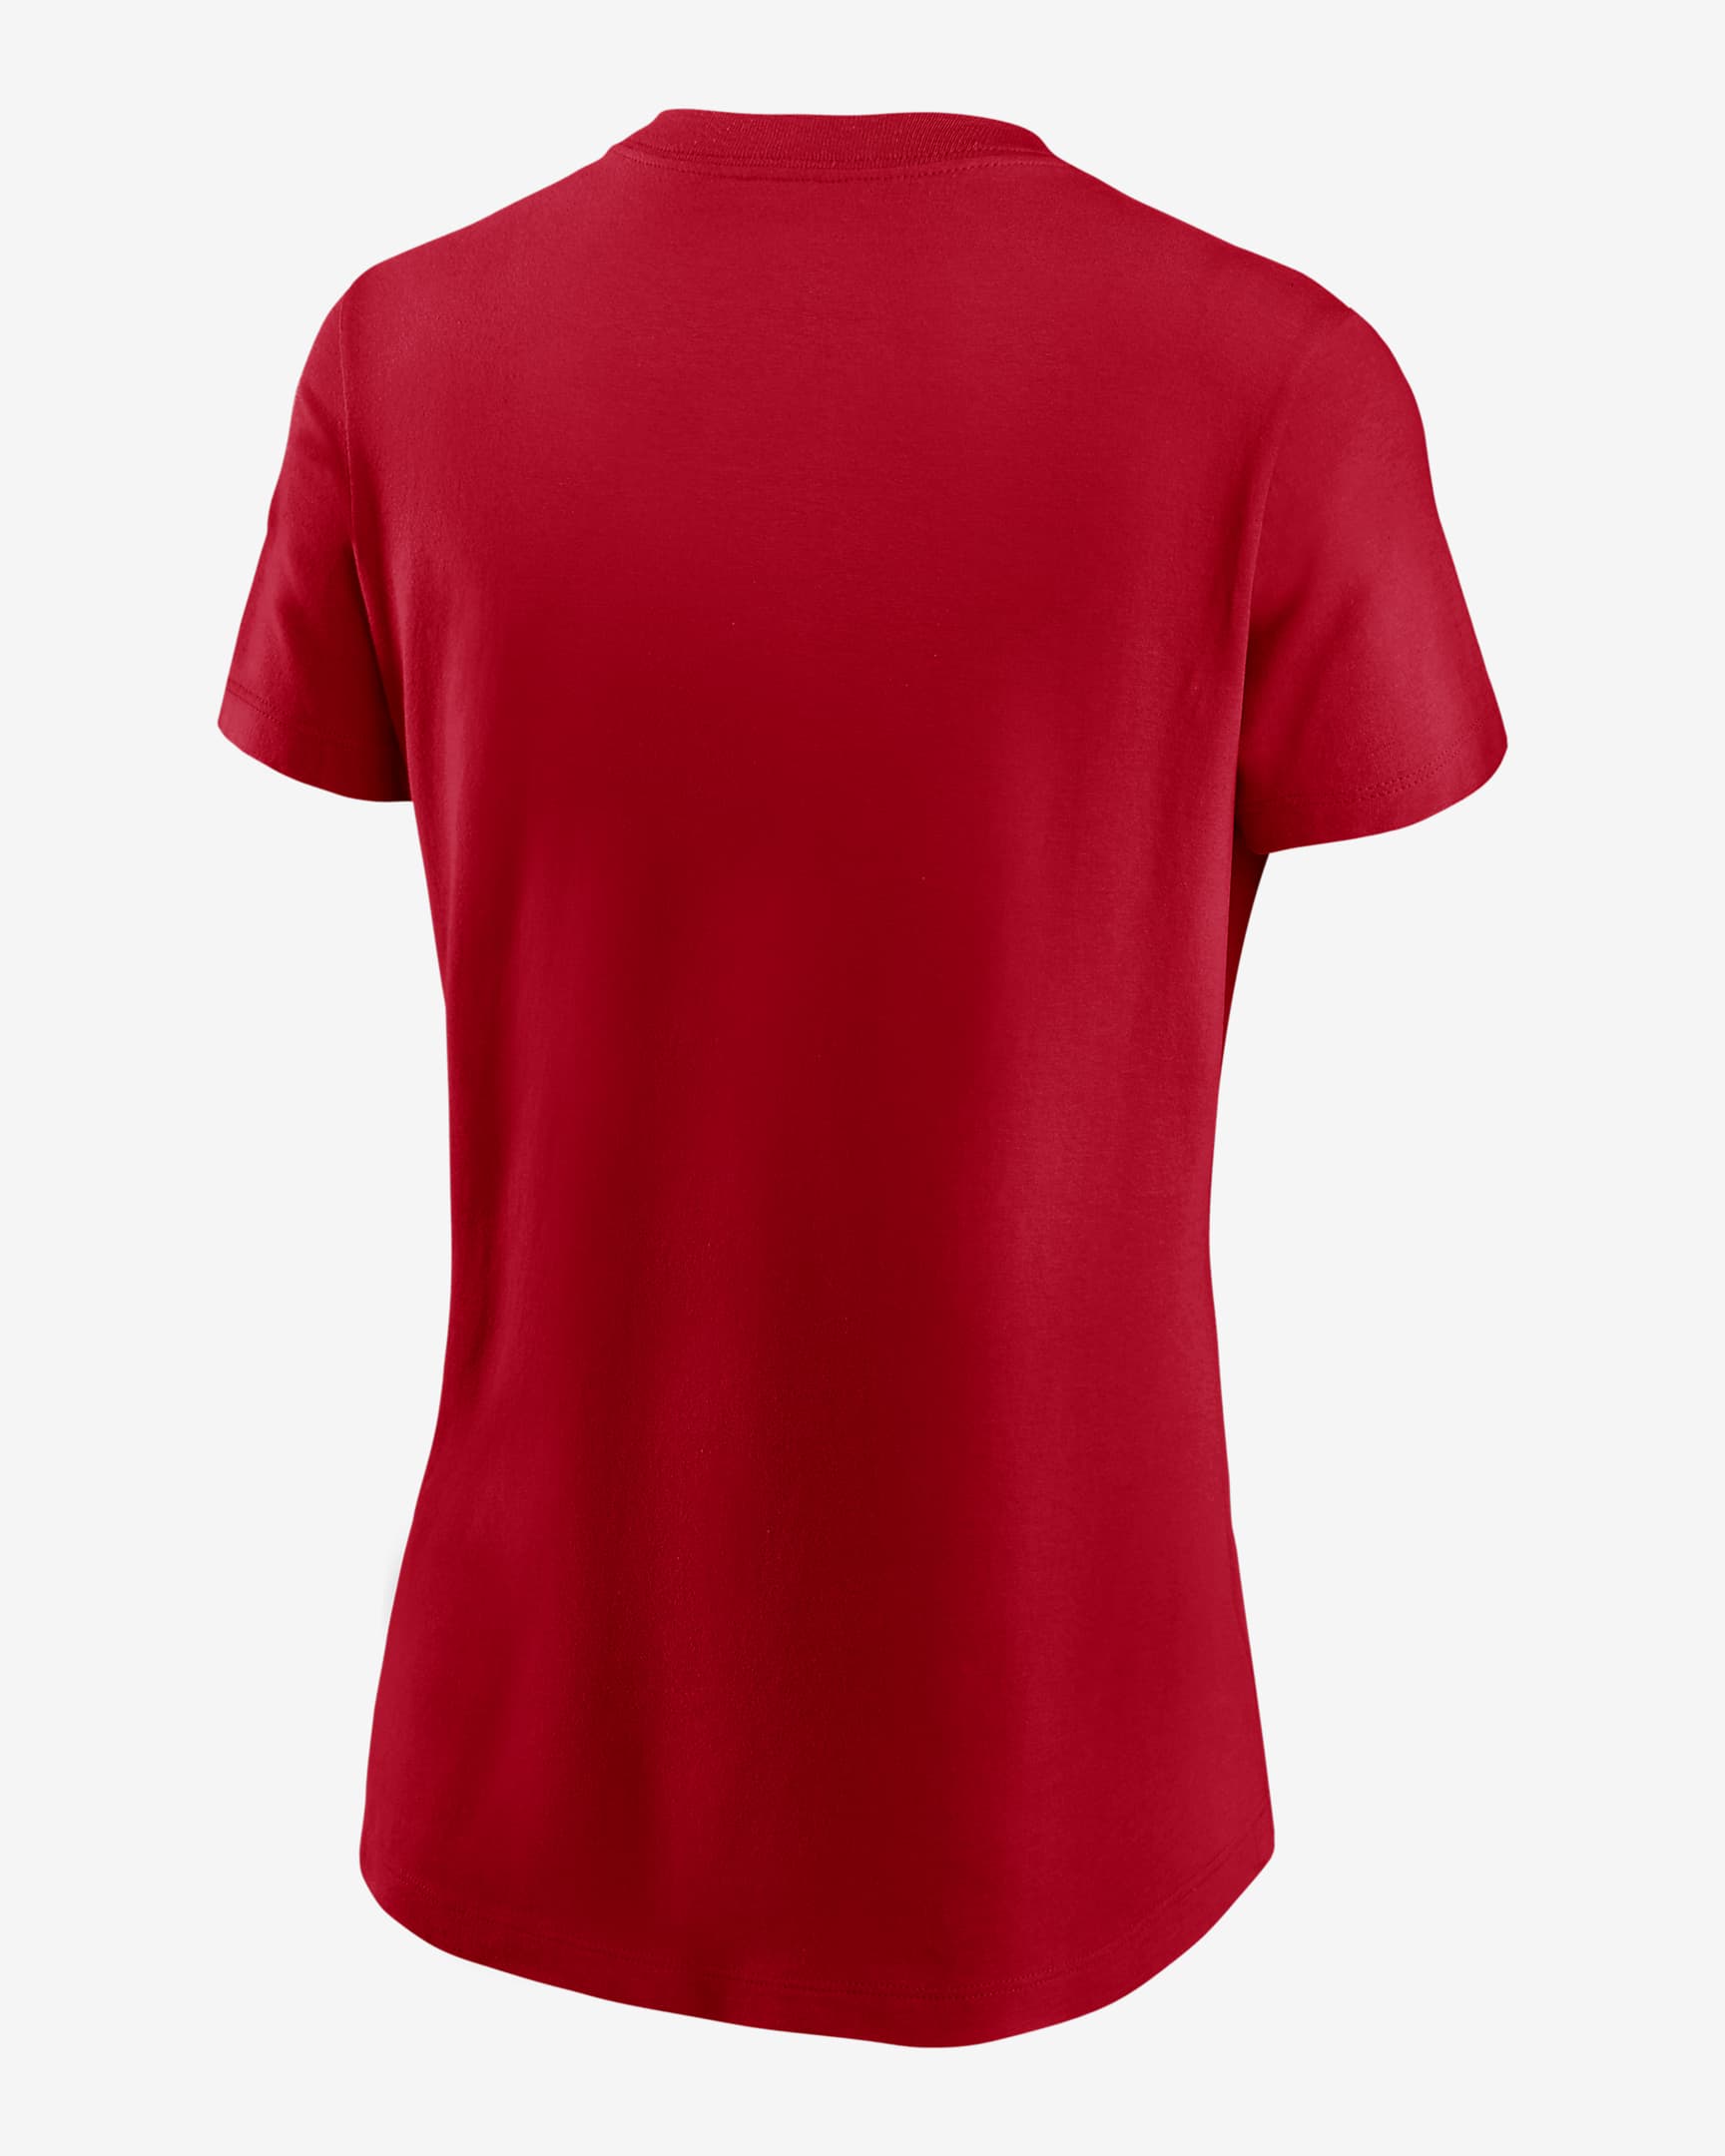 Nike Logo Essential (NFL Kansas City Chiefs) Women's T-Shirt - Red